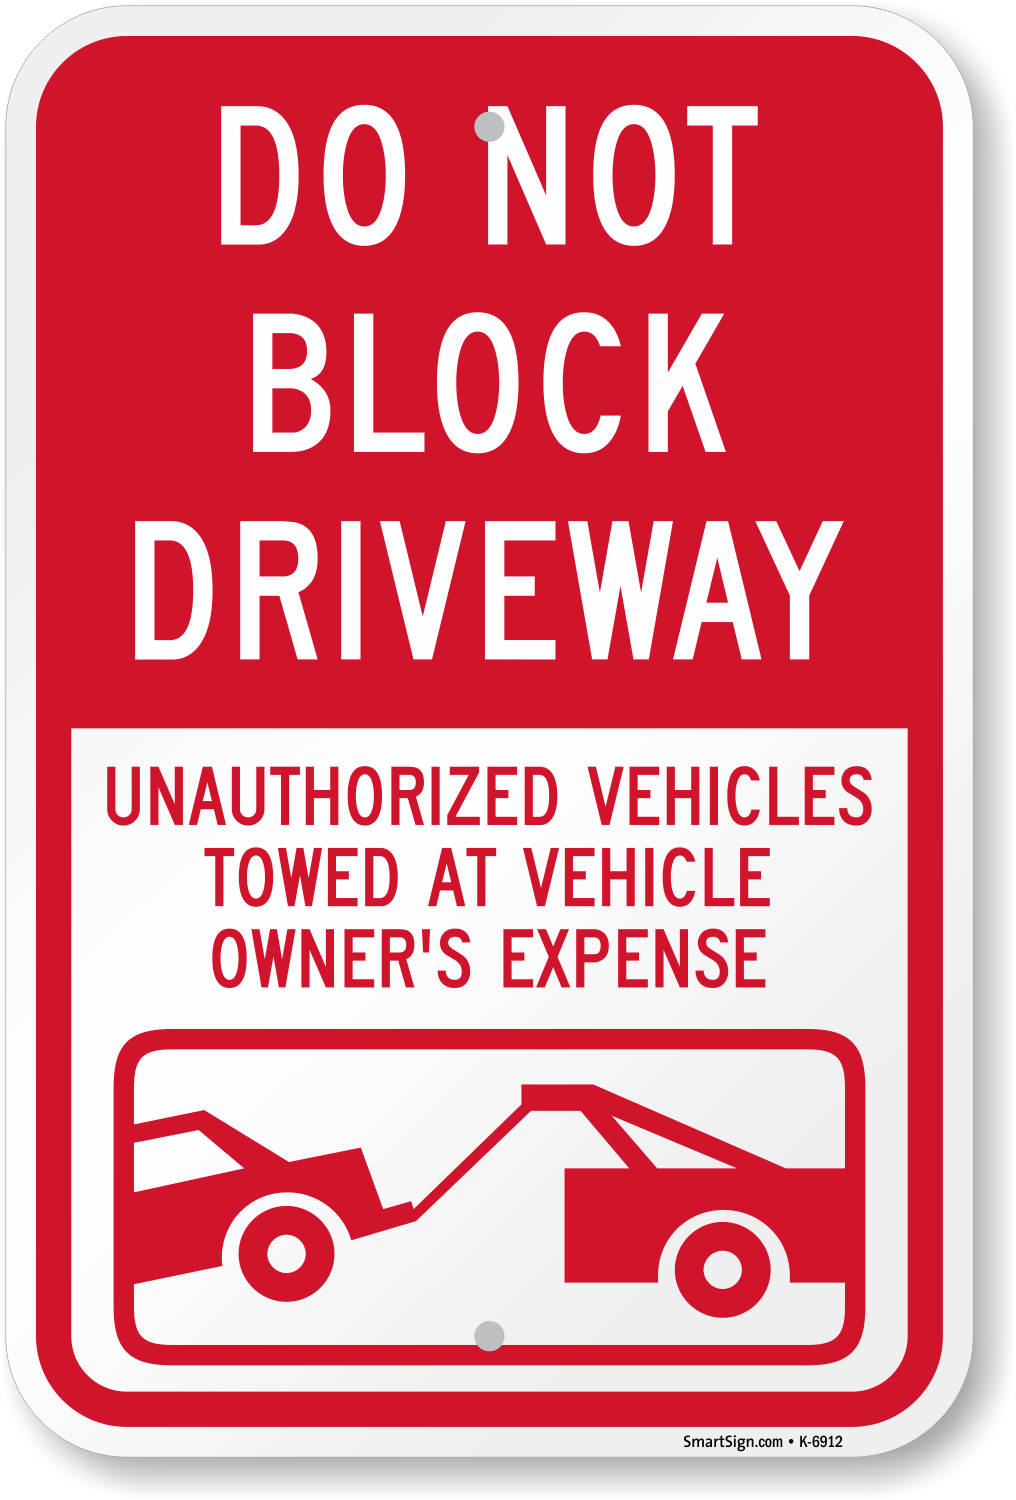 do-not-block-driveway-sign-sku-k-6912